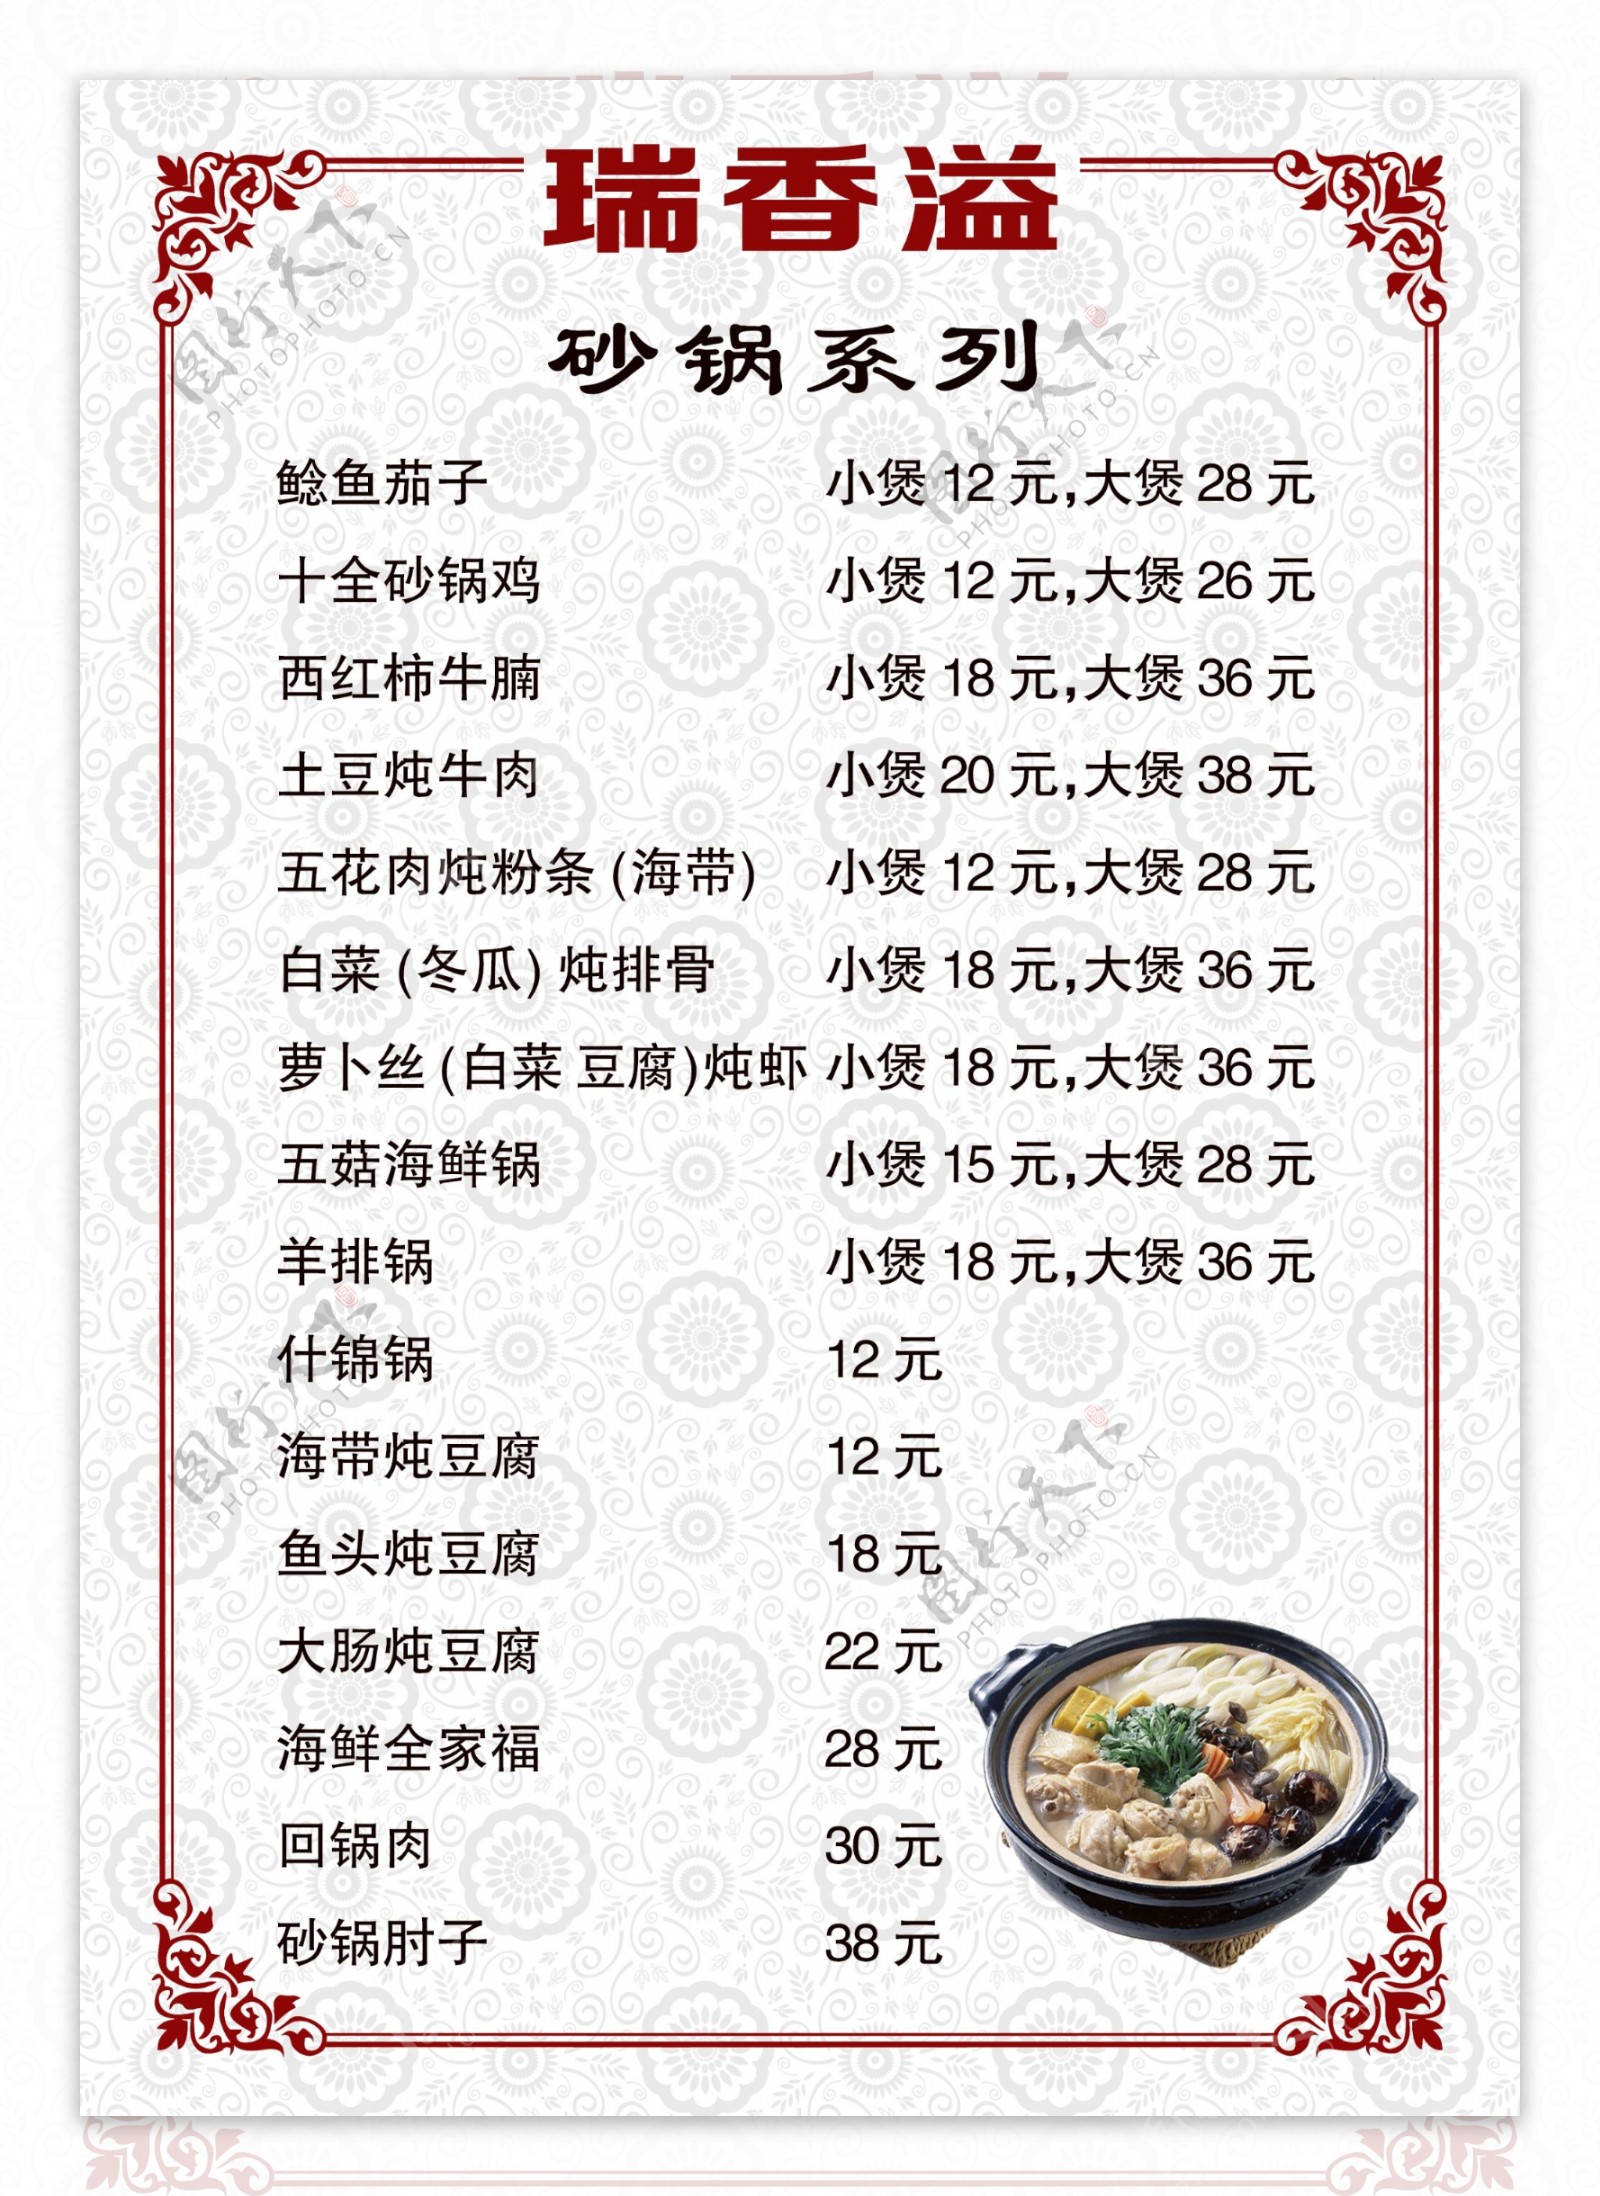 砂锅菜单